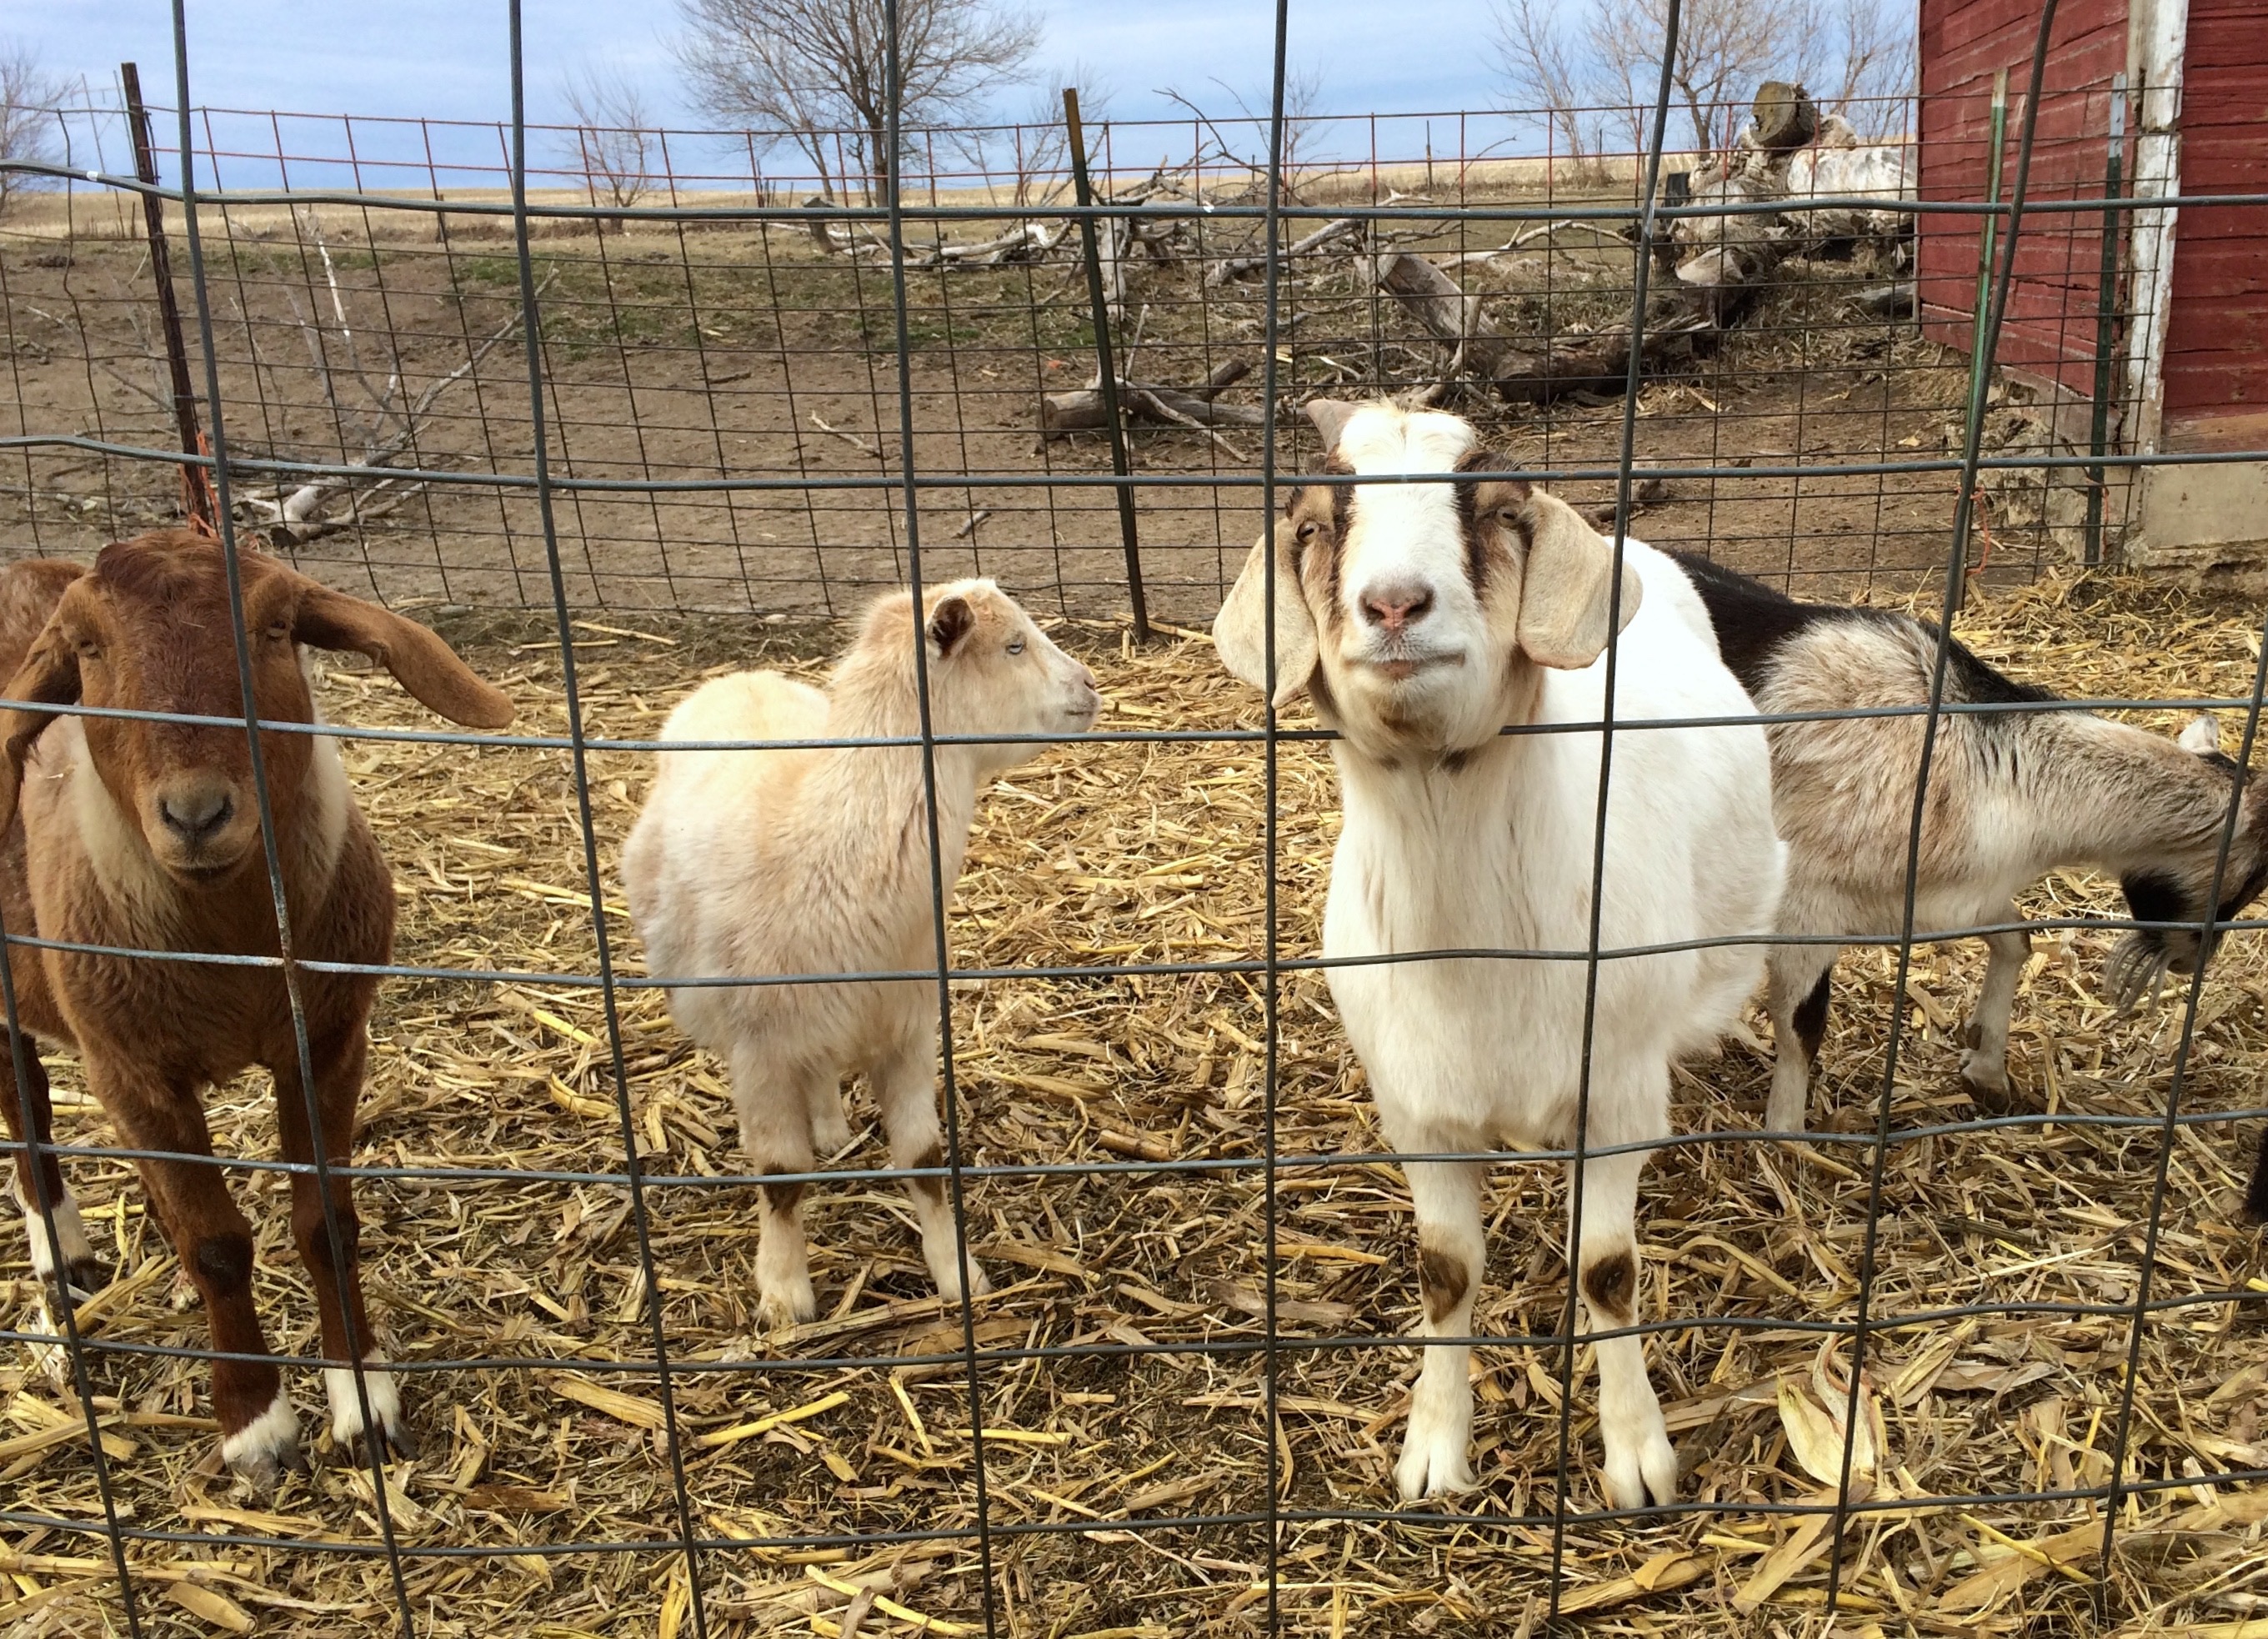 Goats on the Vosburg farm.